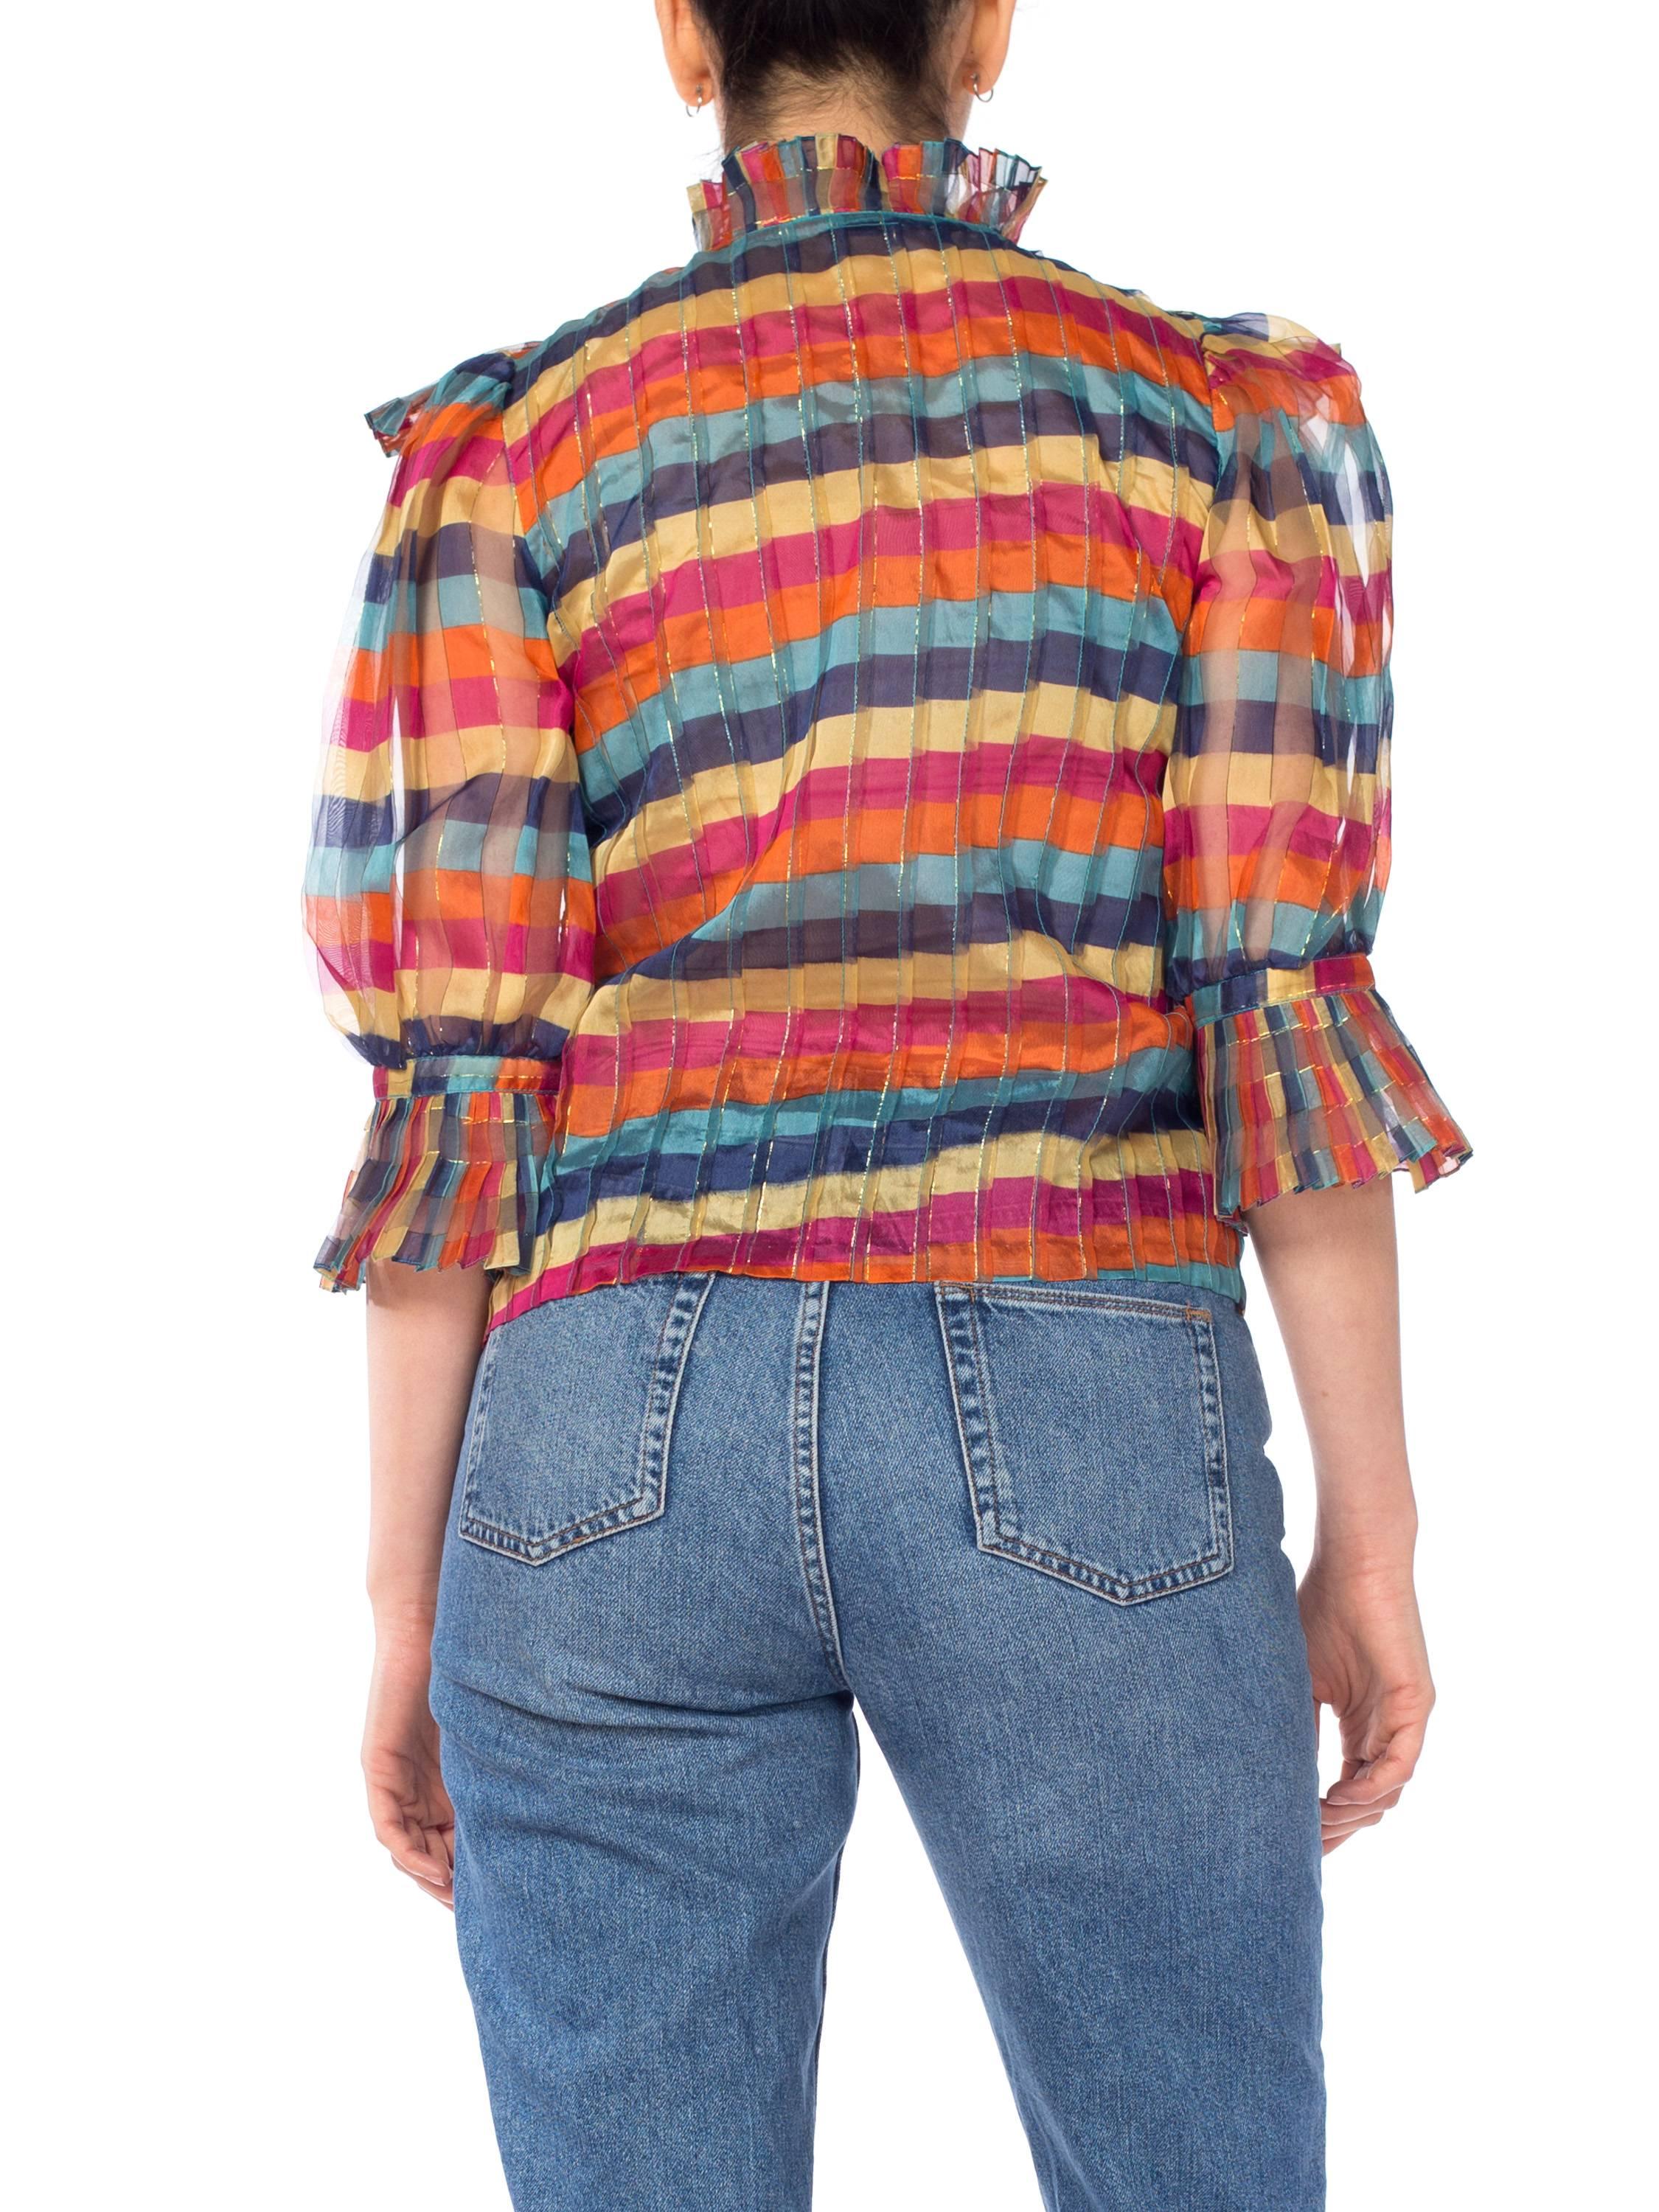 Women's Fab Gucci Style 1970s Rainbow Ruffled Silk Blouse